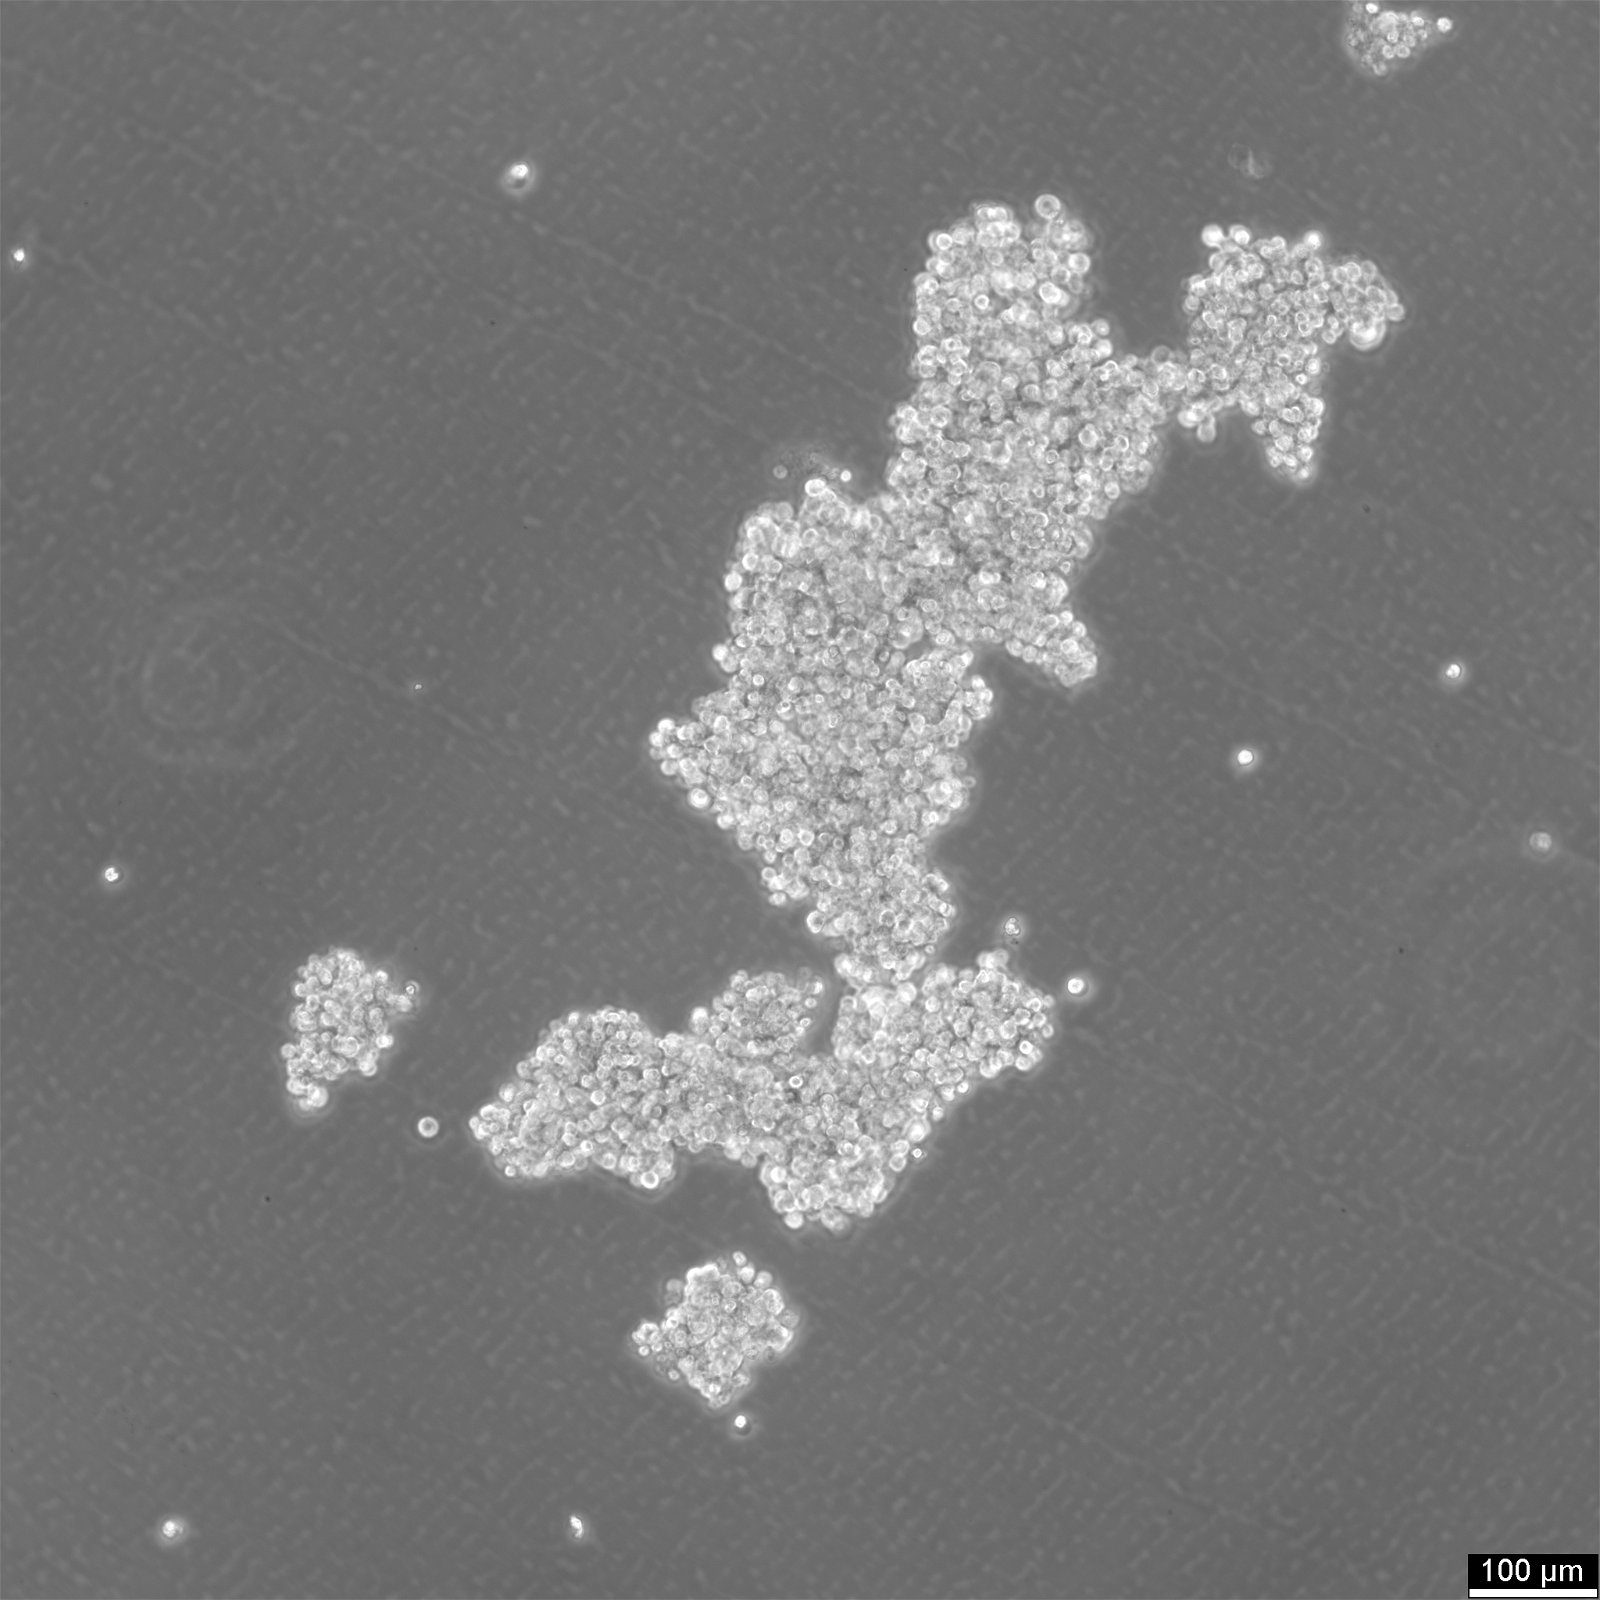 NCI-H524 Cells